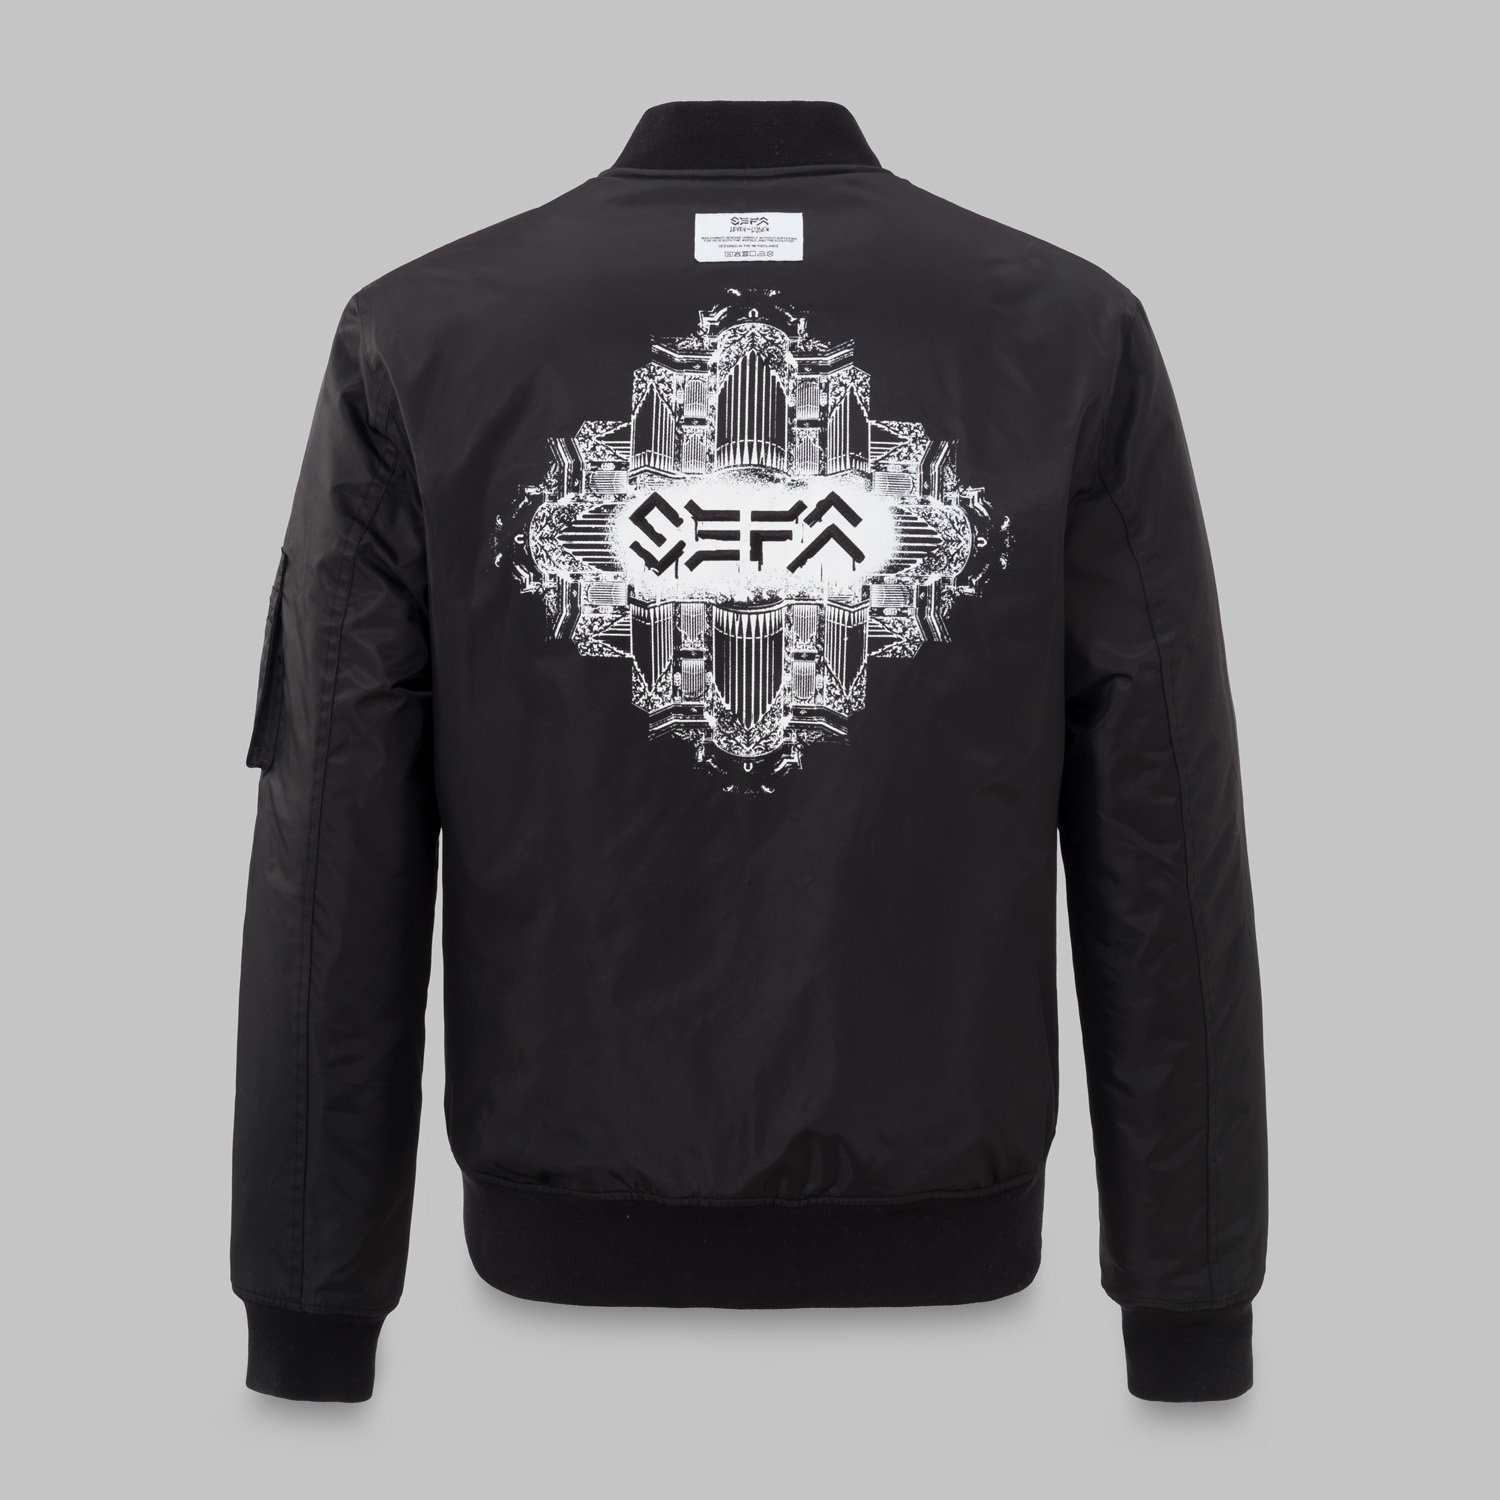 Sefa bomber jacket black/white-5